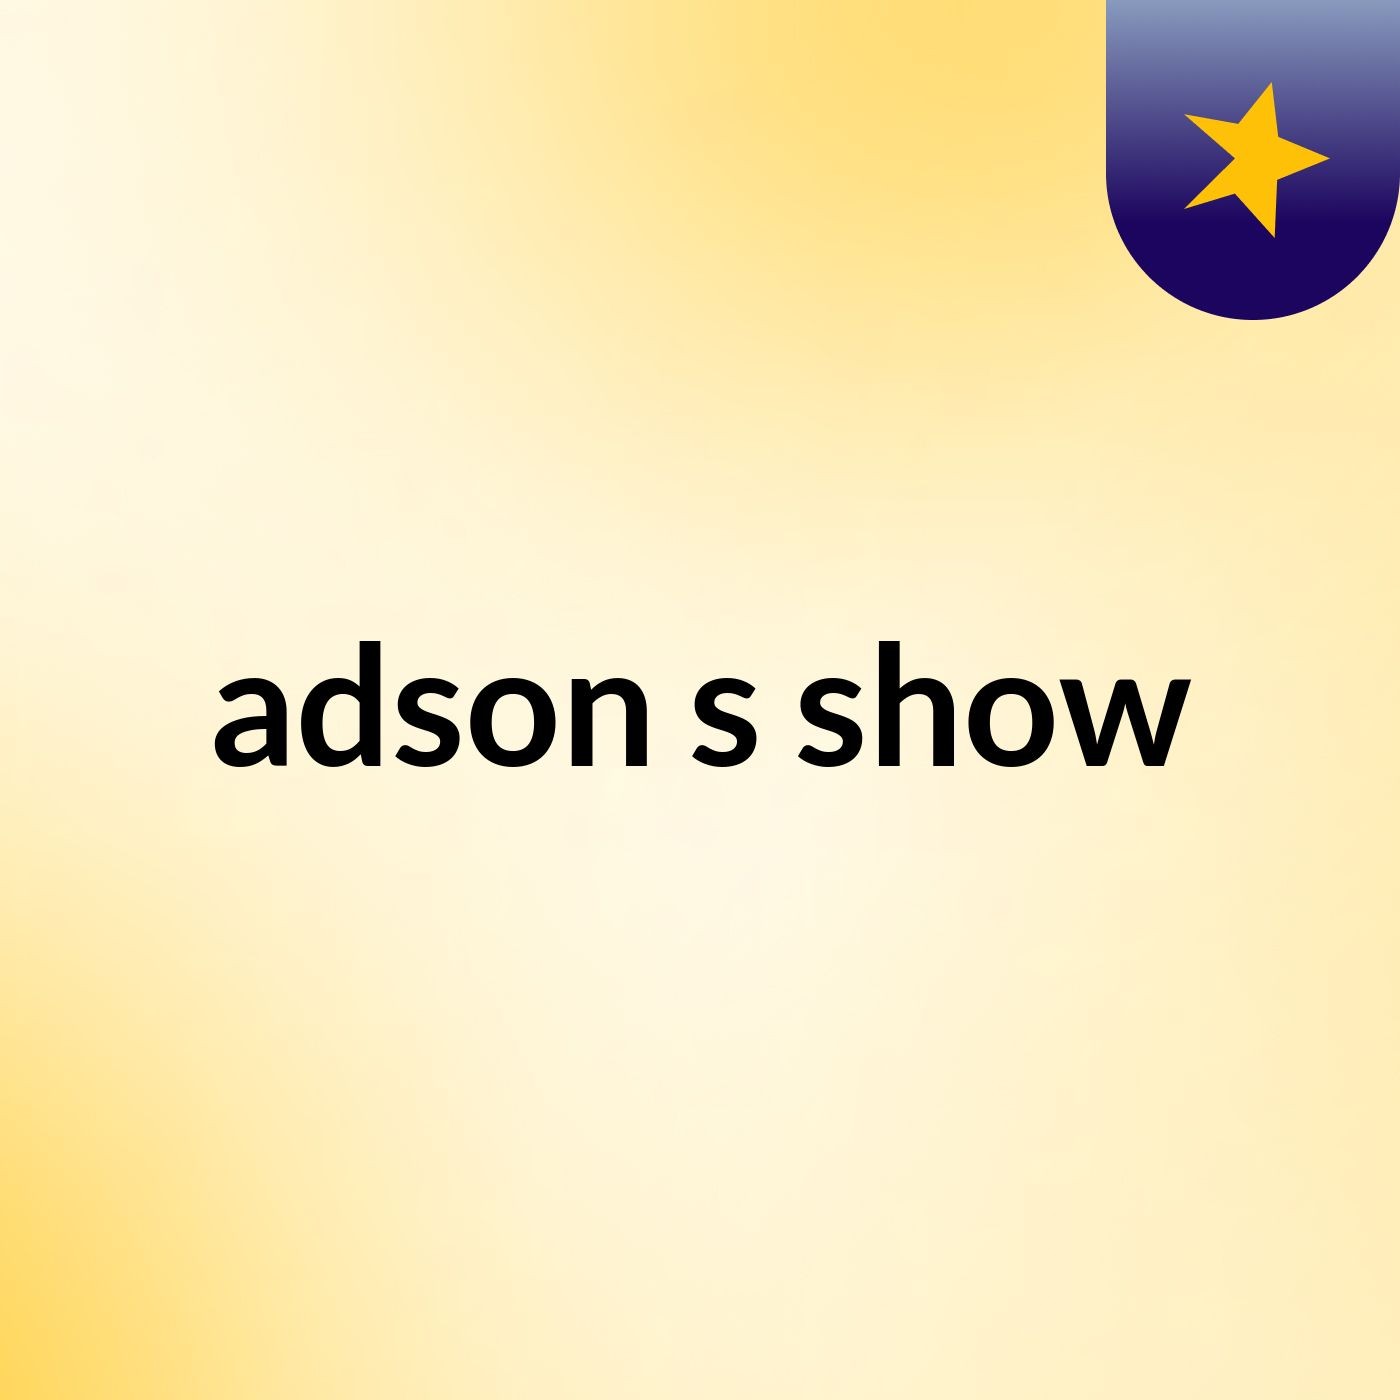 adson's show